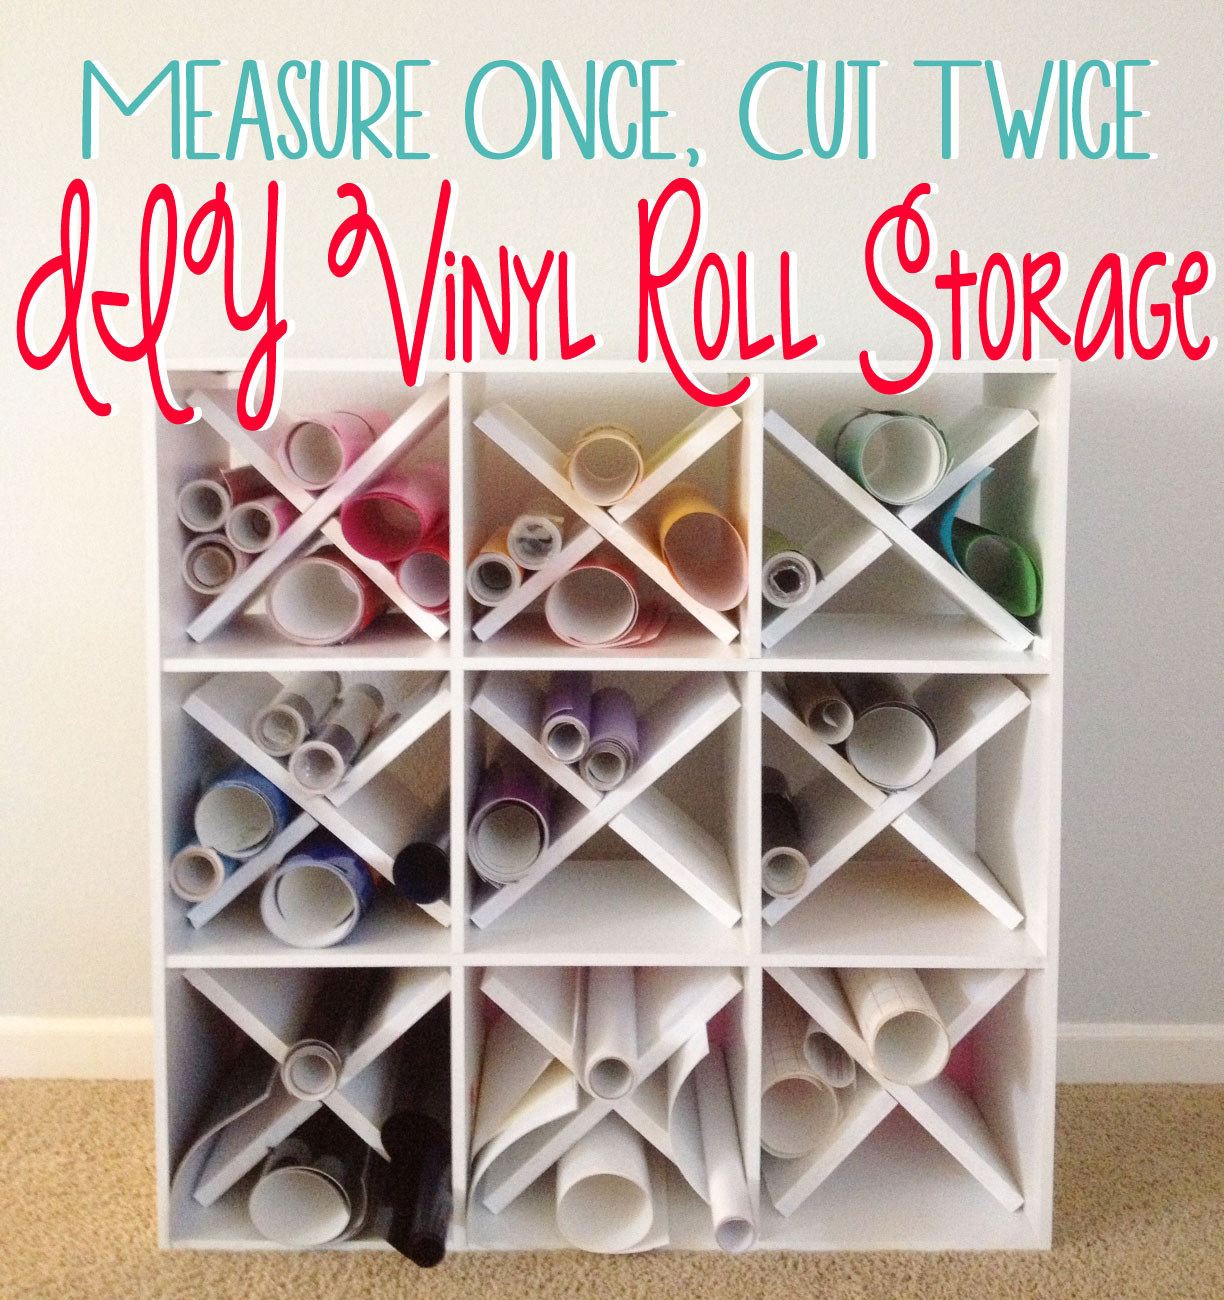 Best ideas about DIY Vinyl Storage
. Save or Pin Vinyl Storage Ideas – The Vinyl Cut Now.